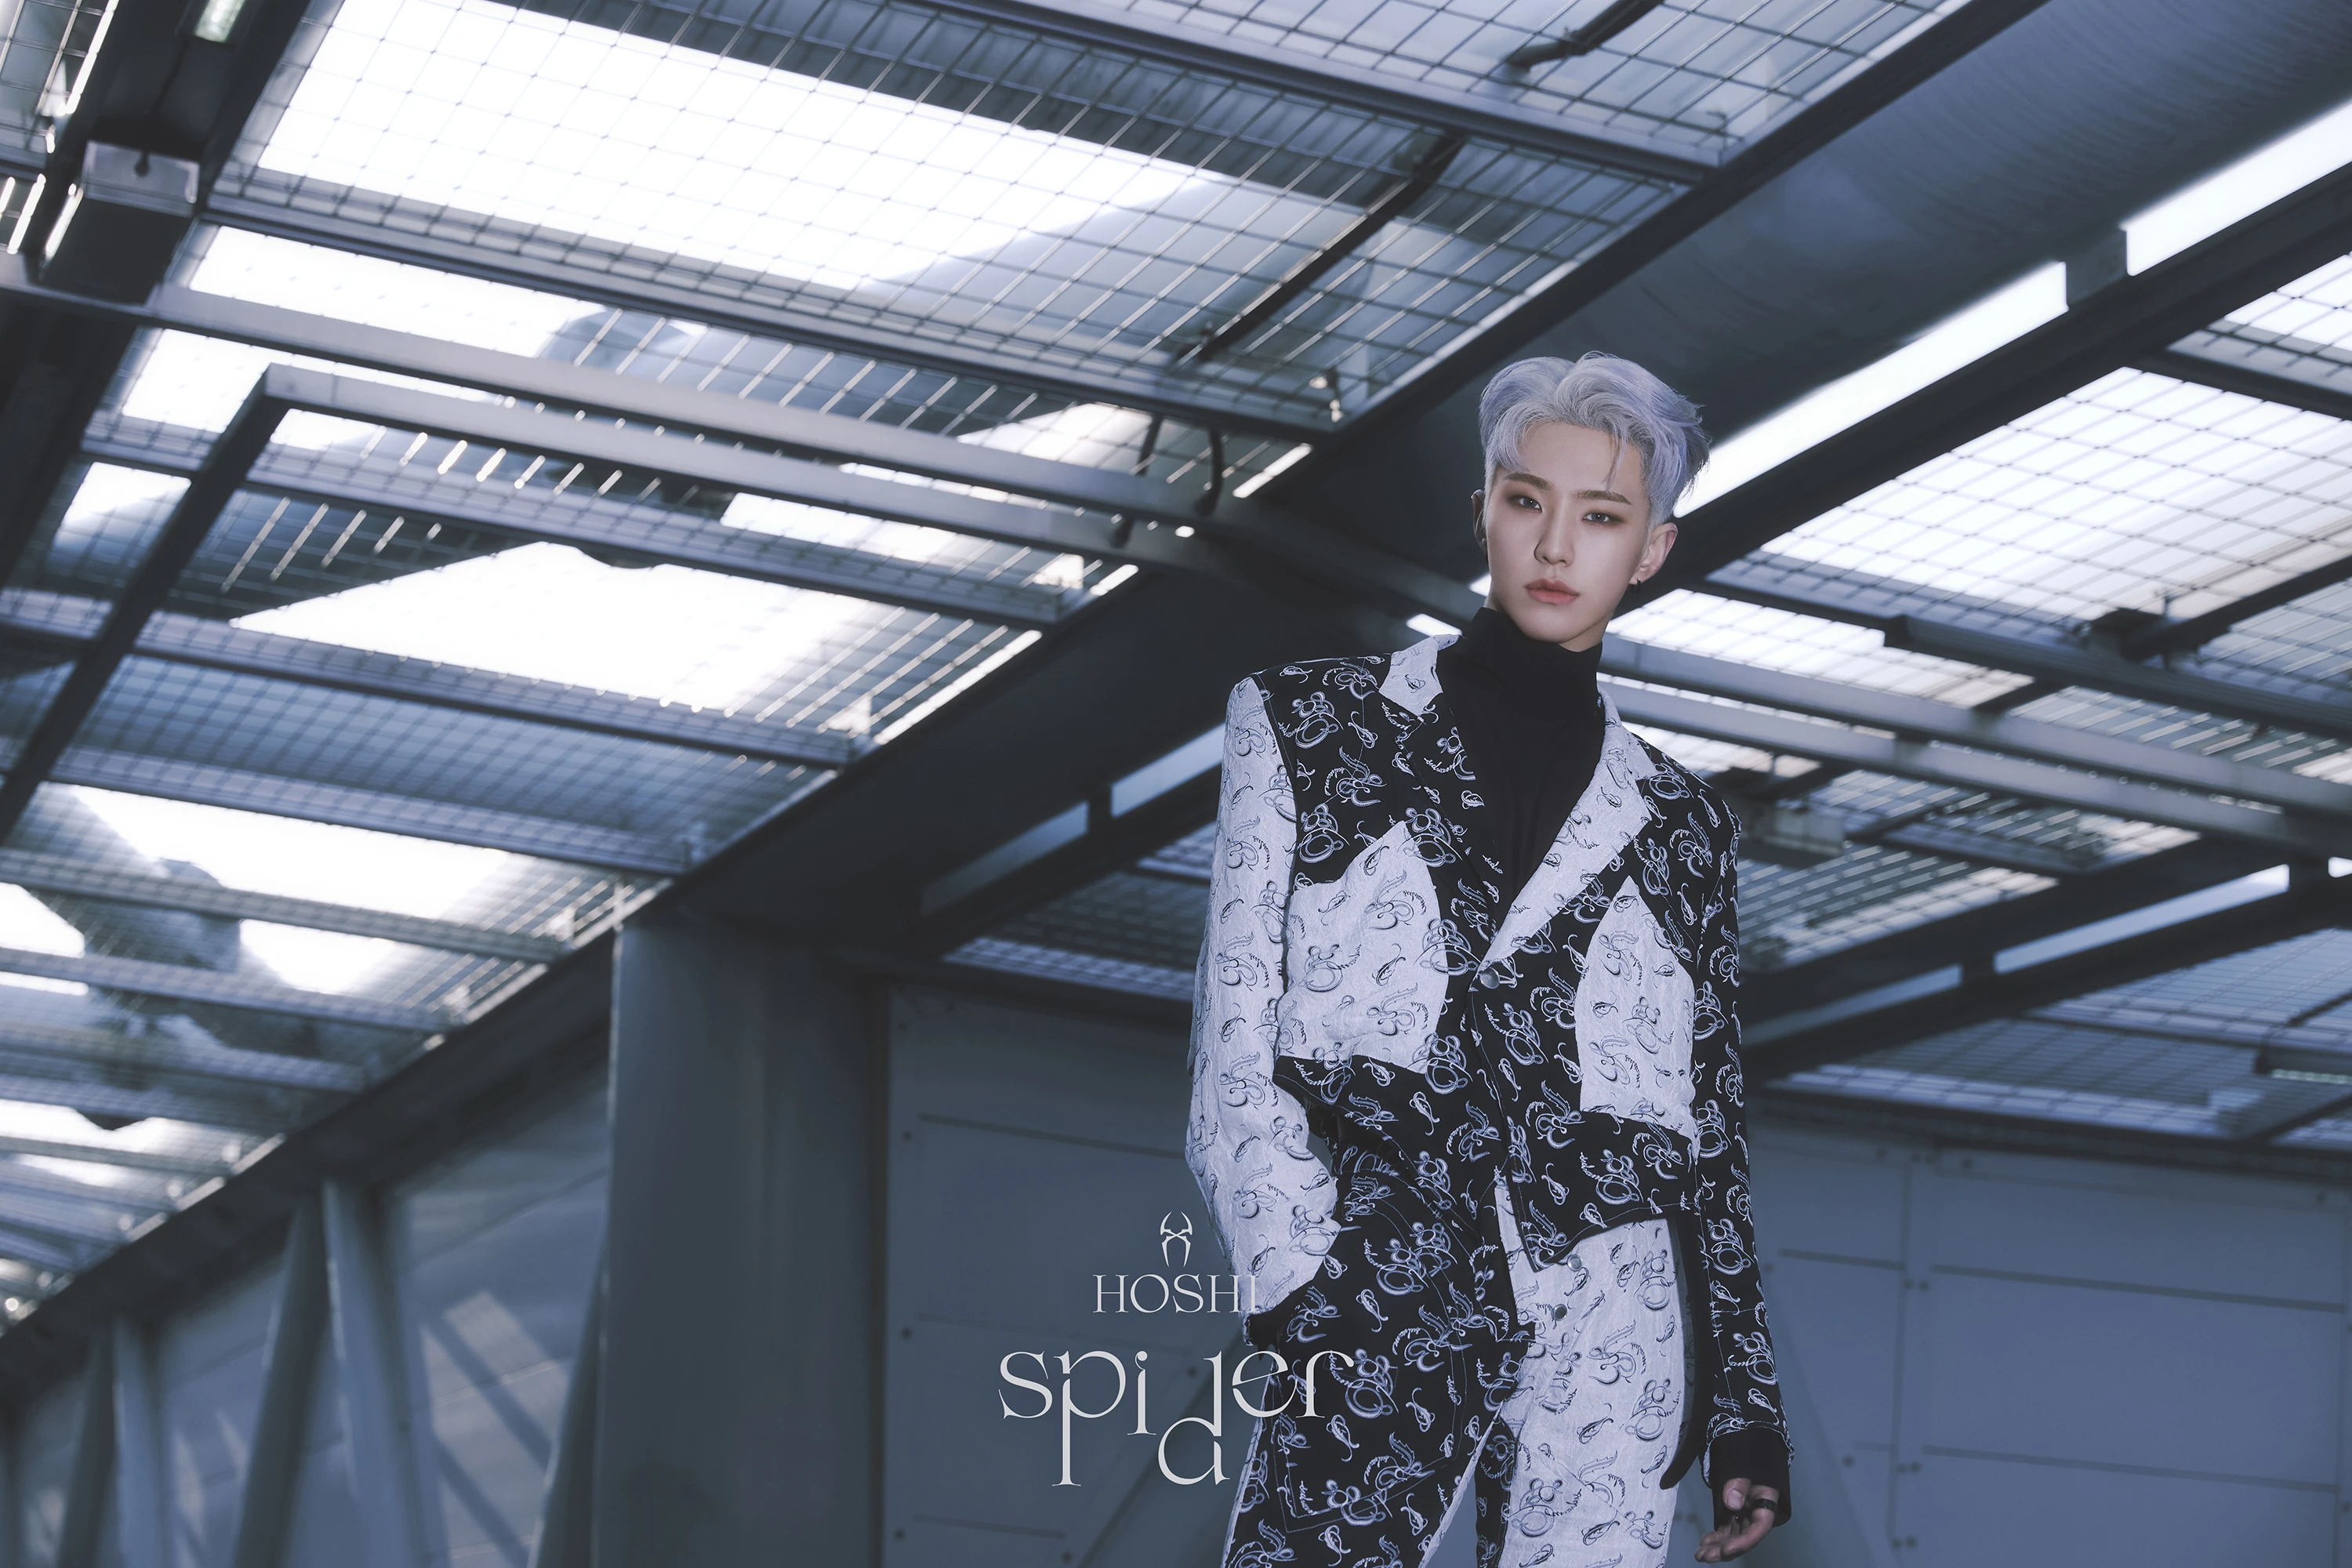 HOSHI 'Spider' Concept Teaser Images | Kpopping